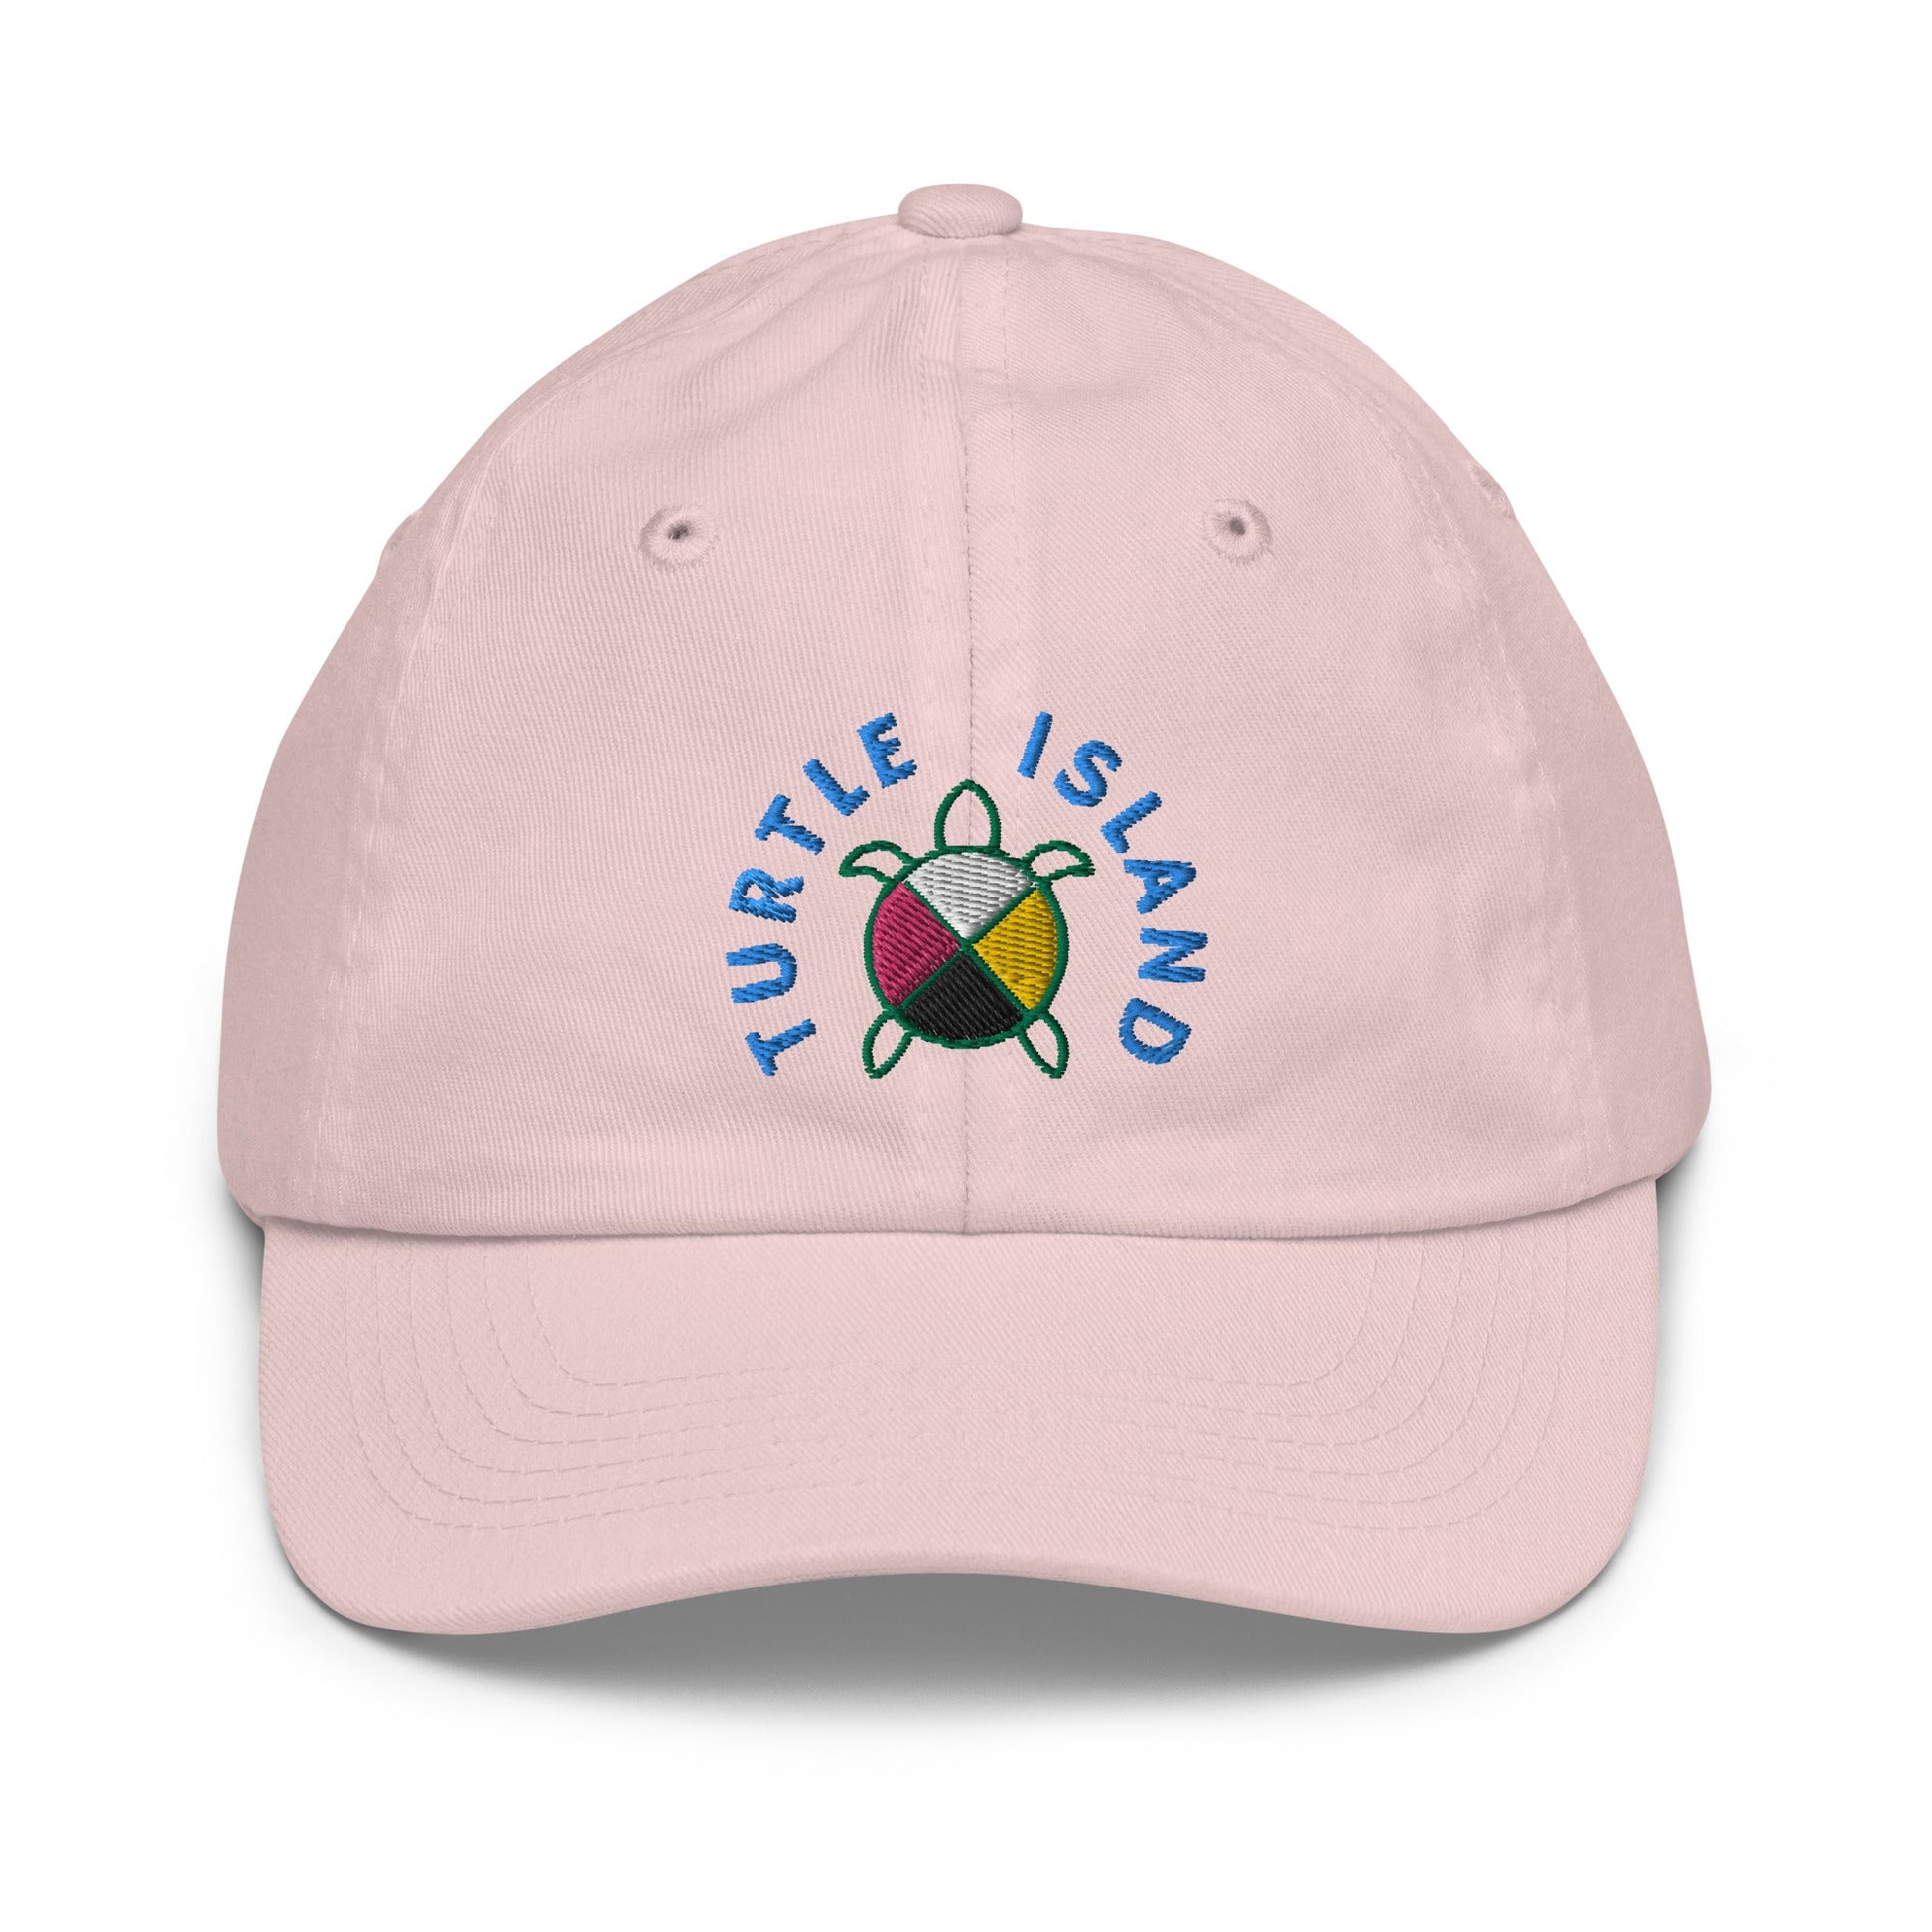 Youth baseball cap - Nikikw Designs